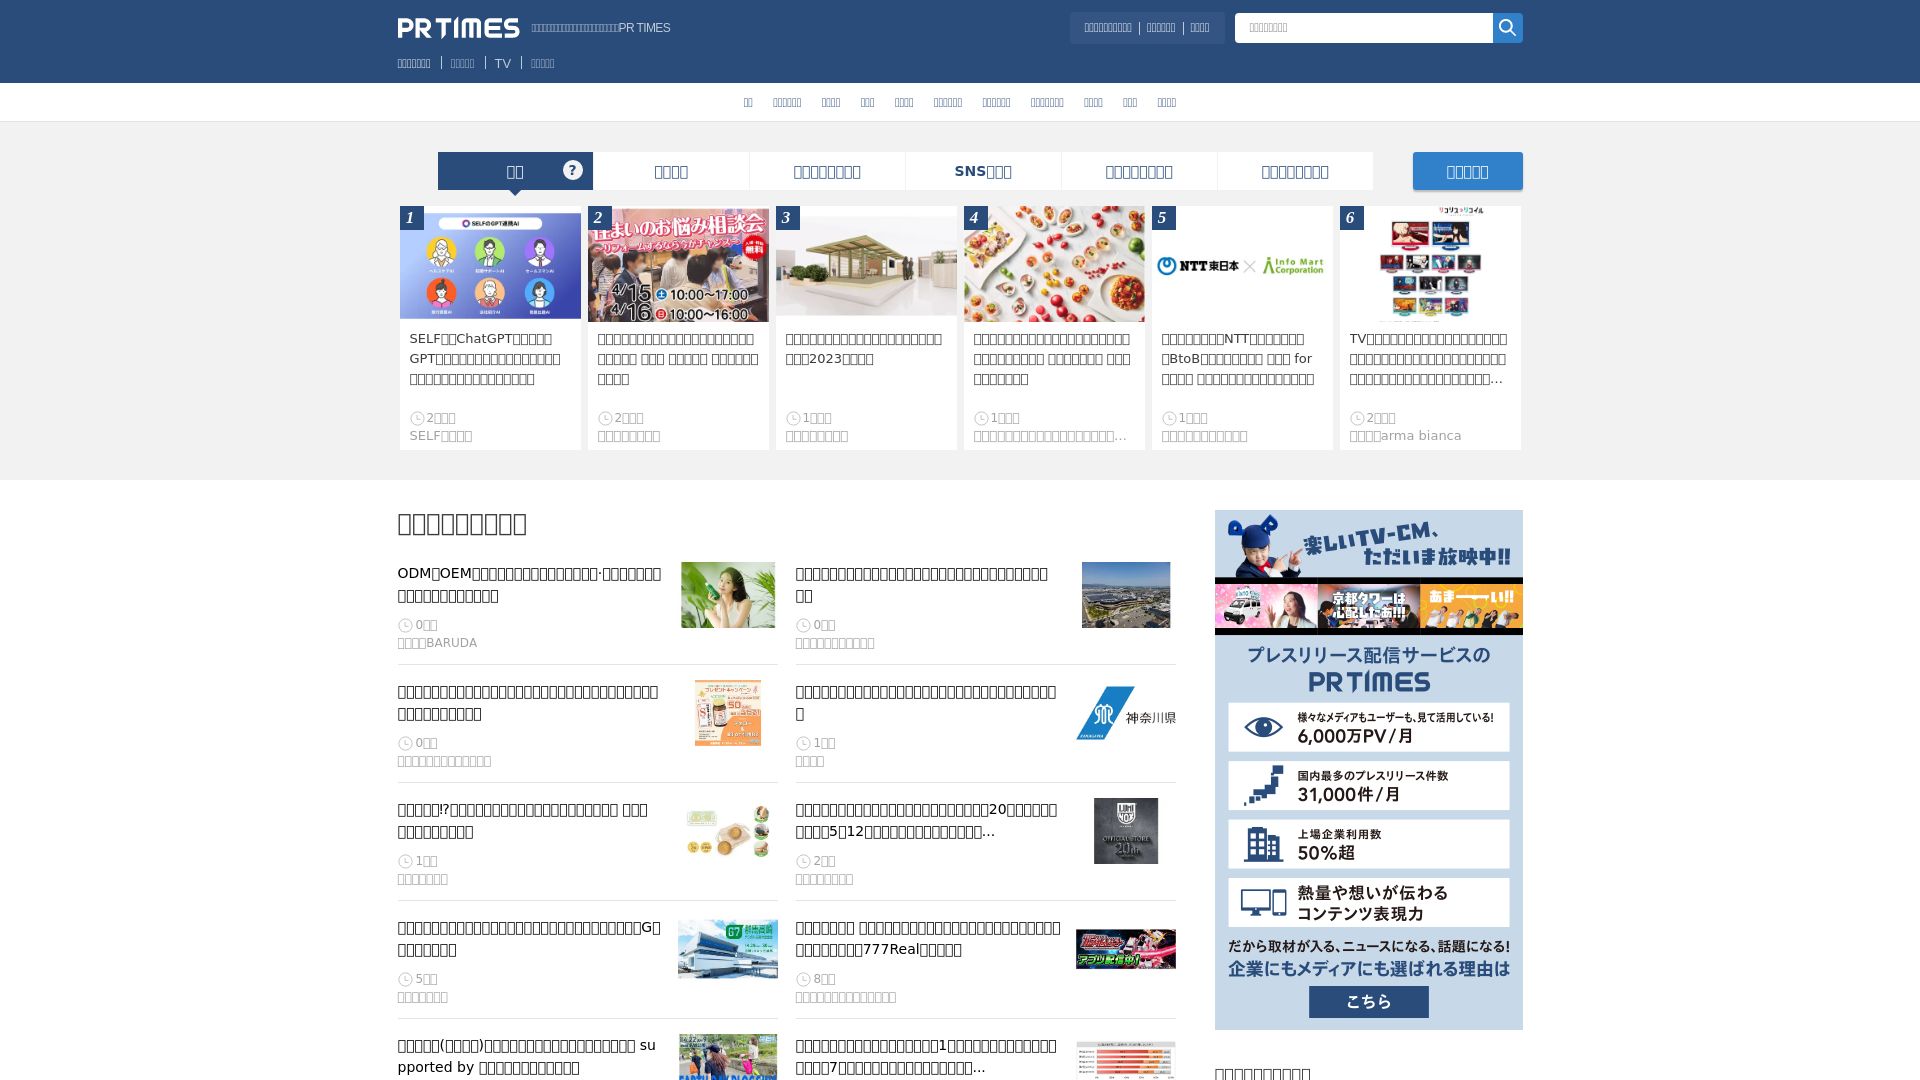 Website status prtimes.jp is   ONLINE